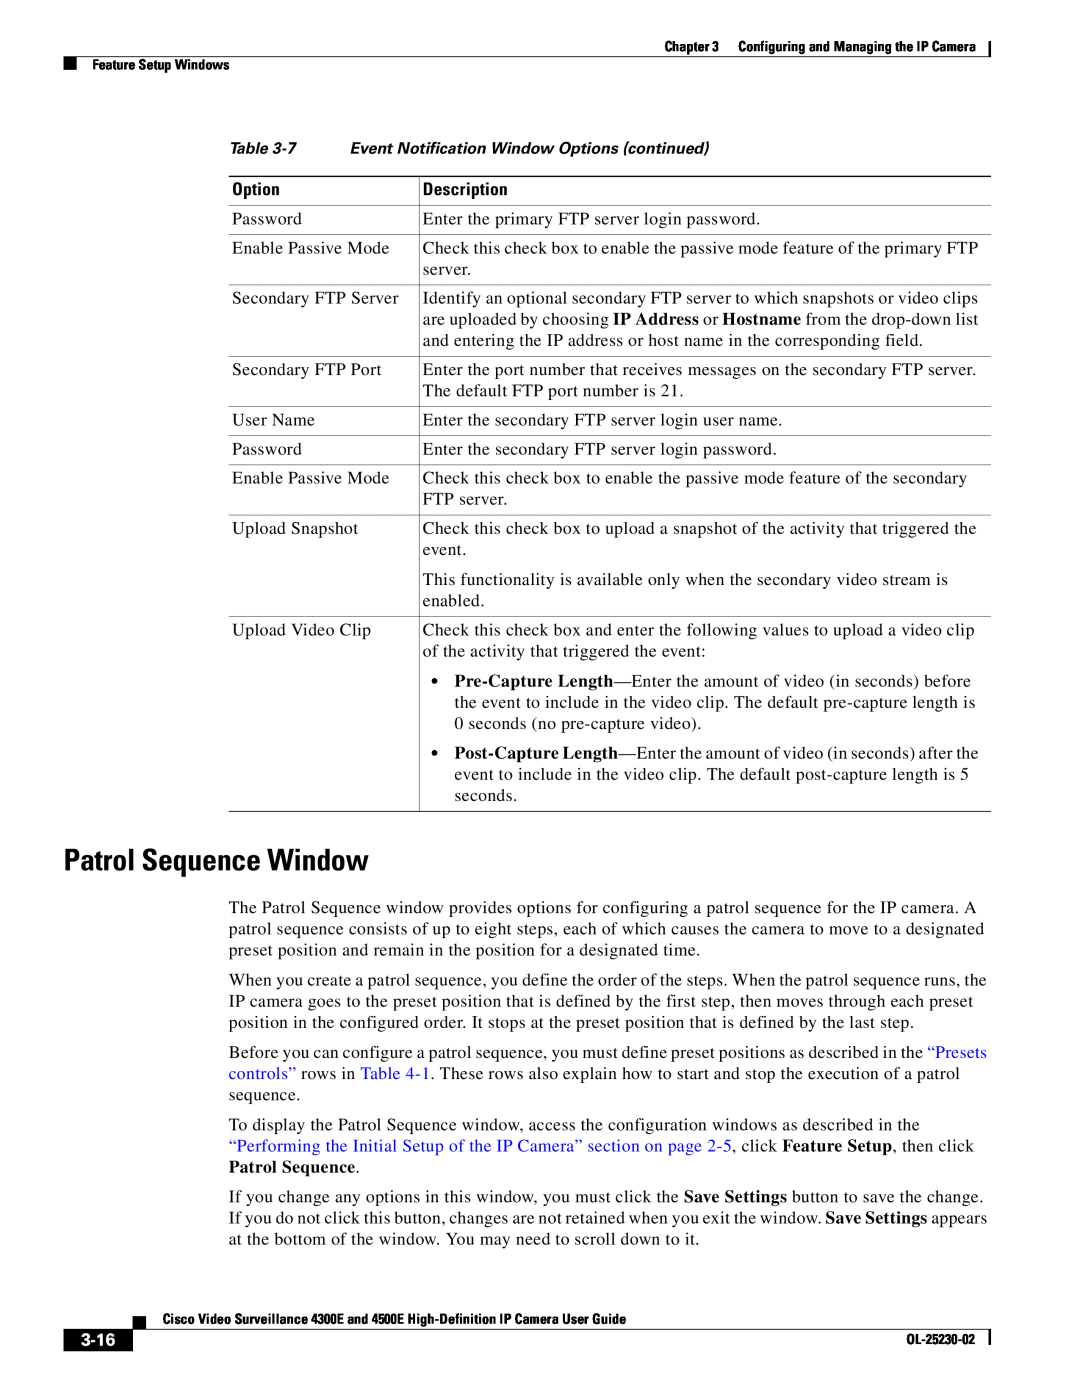 Cisco Systems 4300E, 4500E manual Patrol Sequence Window, 3-16 